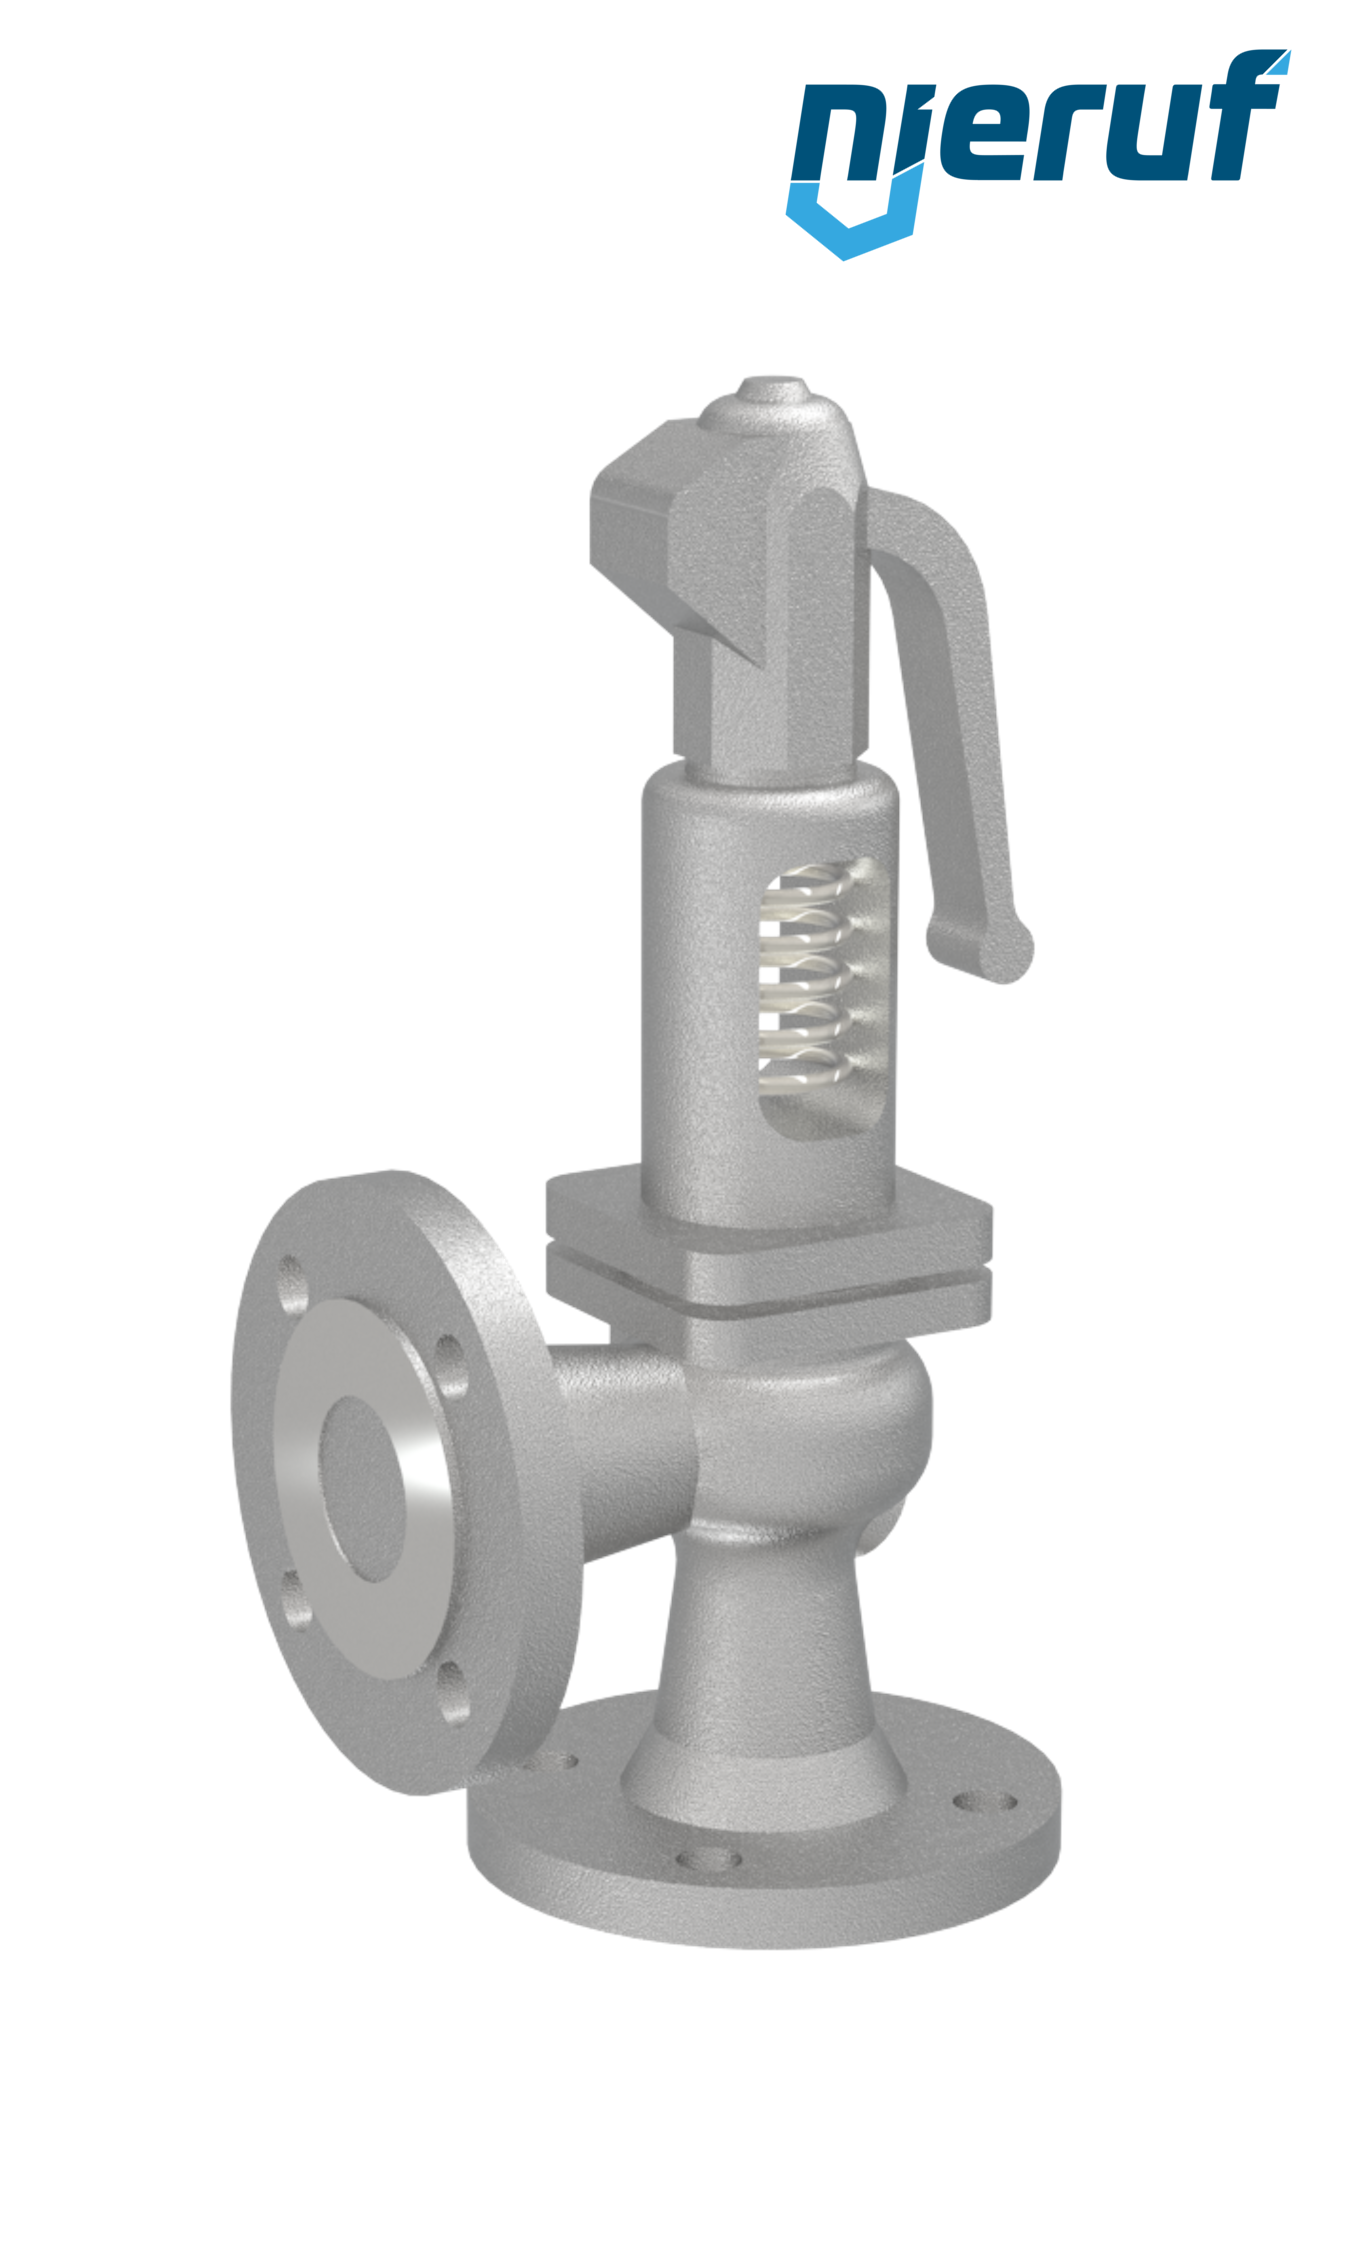 flange-safety valve DN15/DN15 SF0102, cast iron EN-JL1040 EPDM, with lever